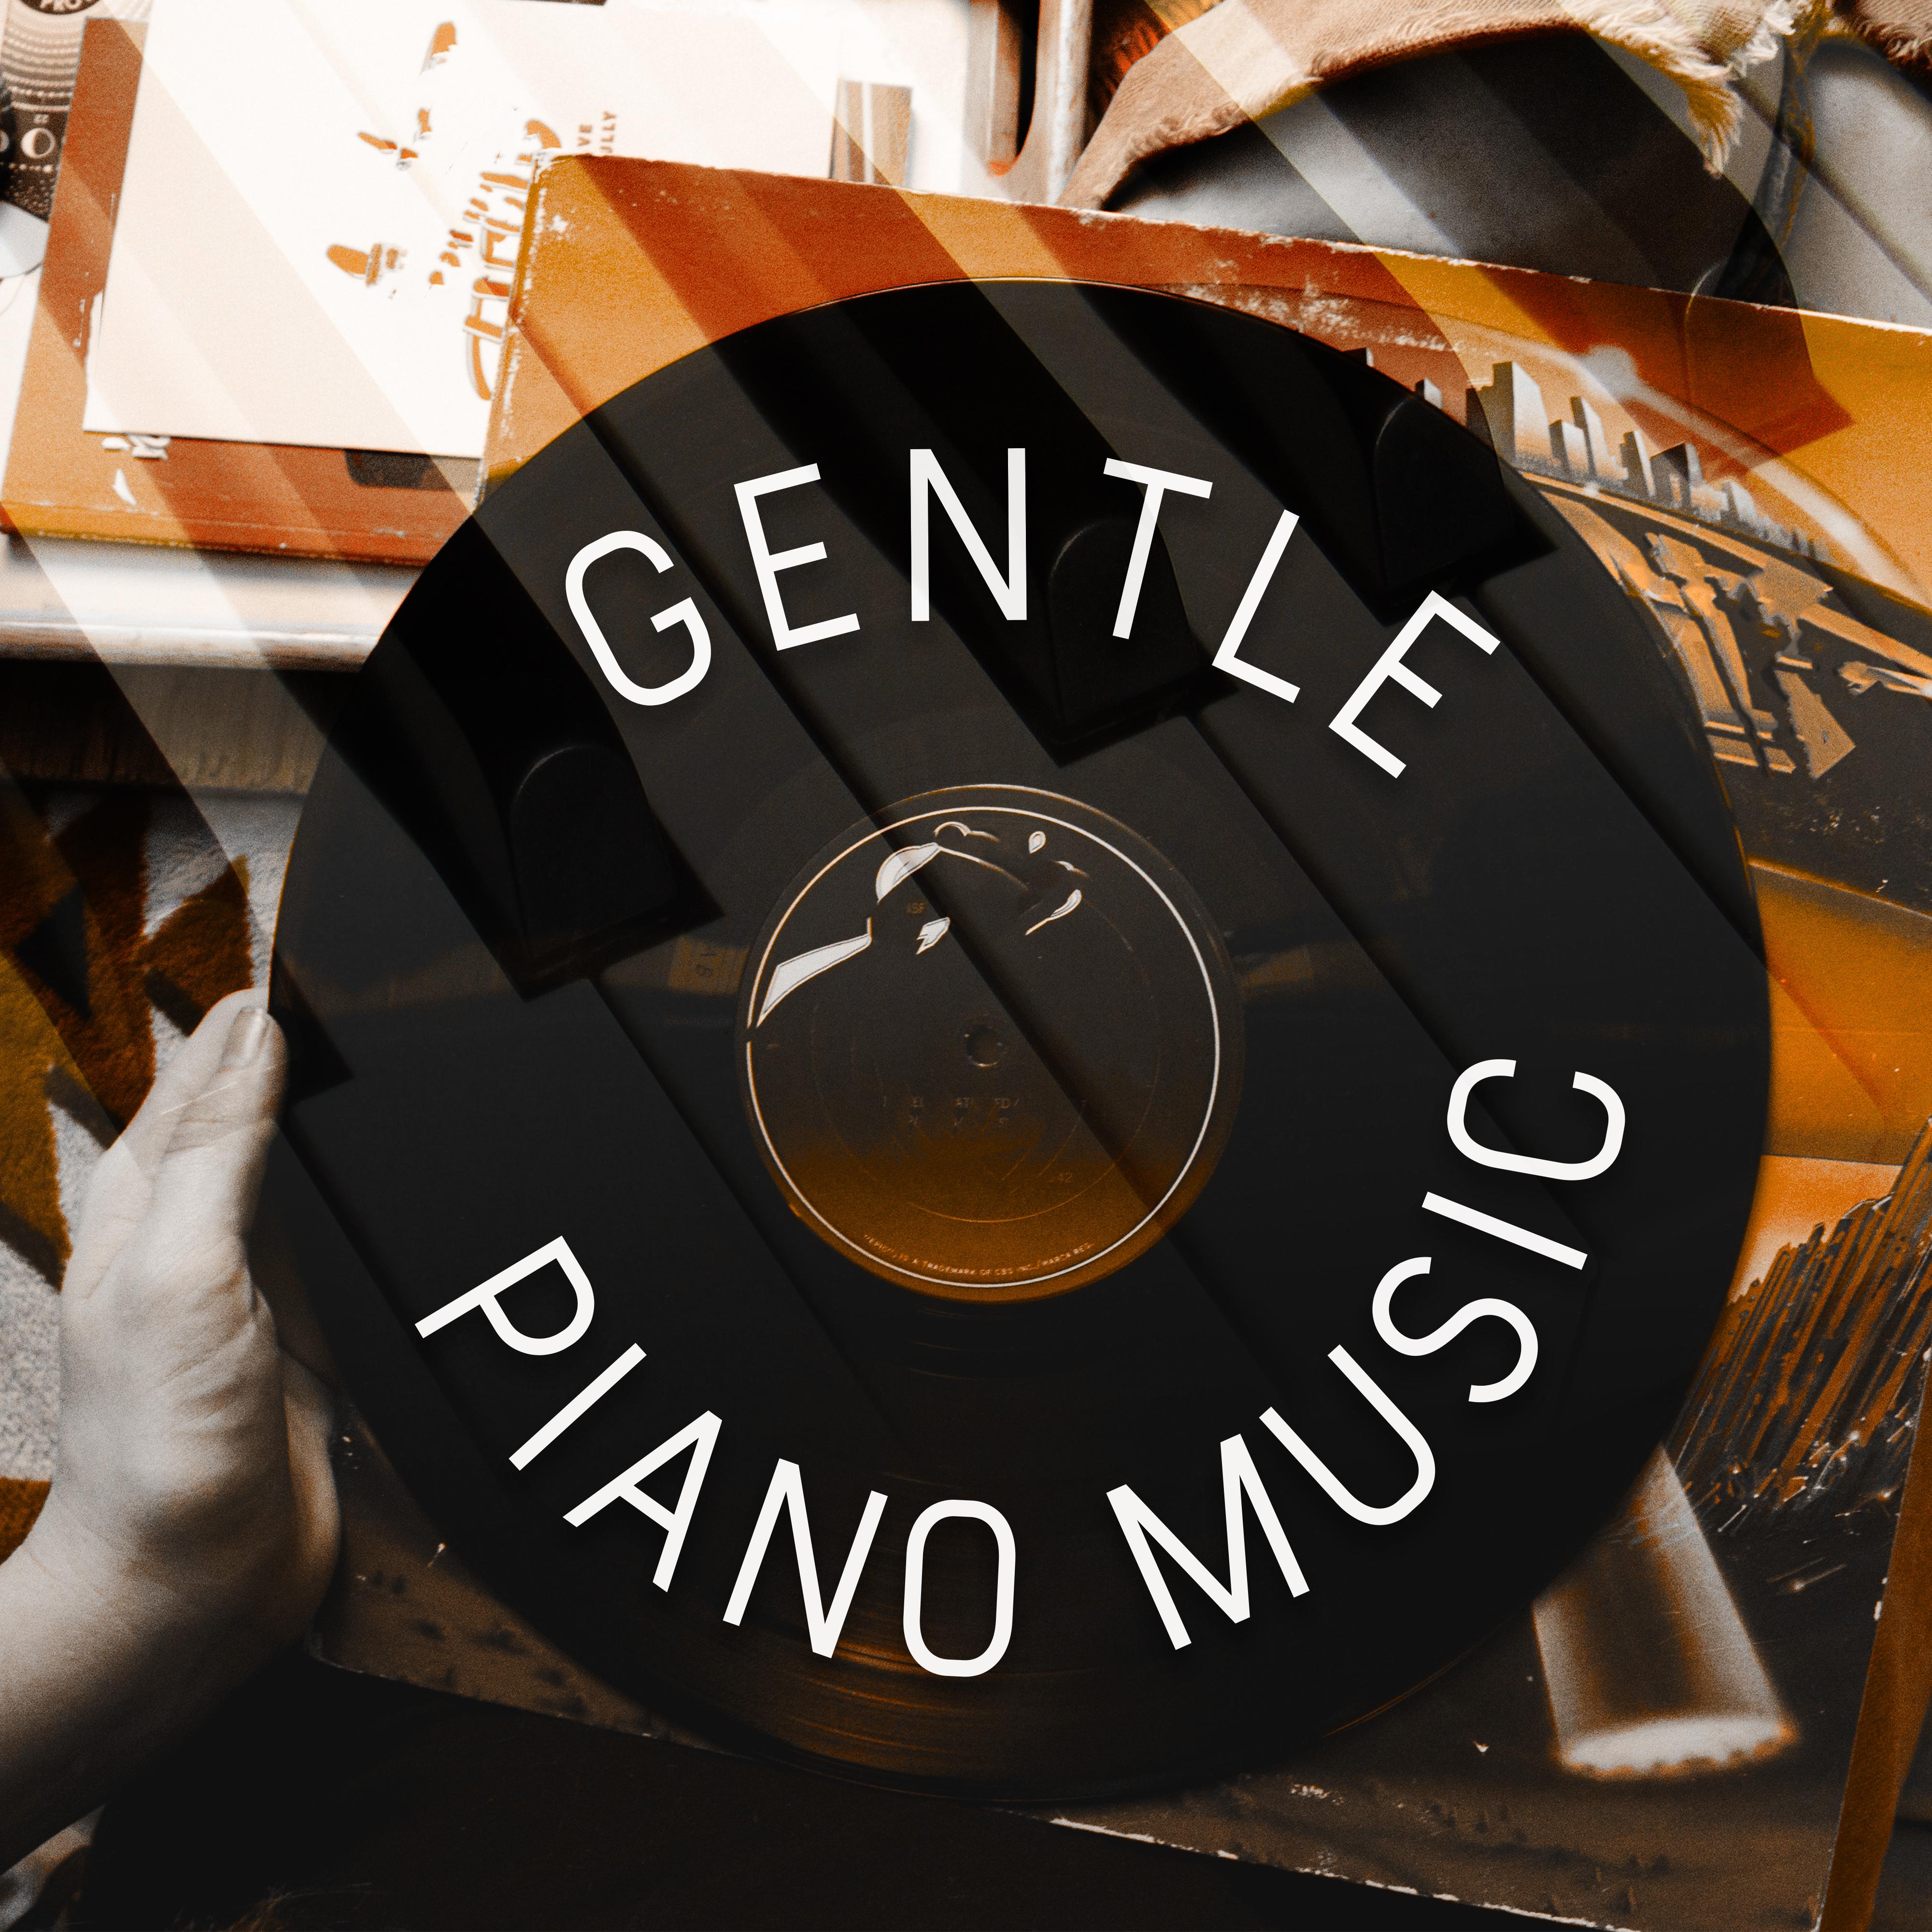 Gentle Piano Music